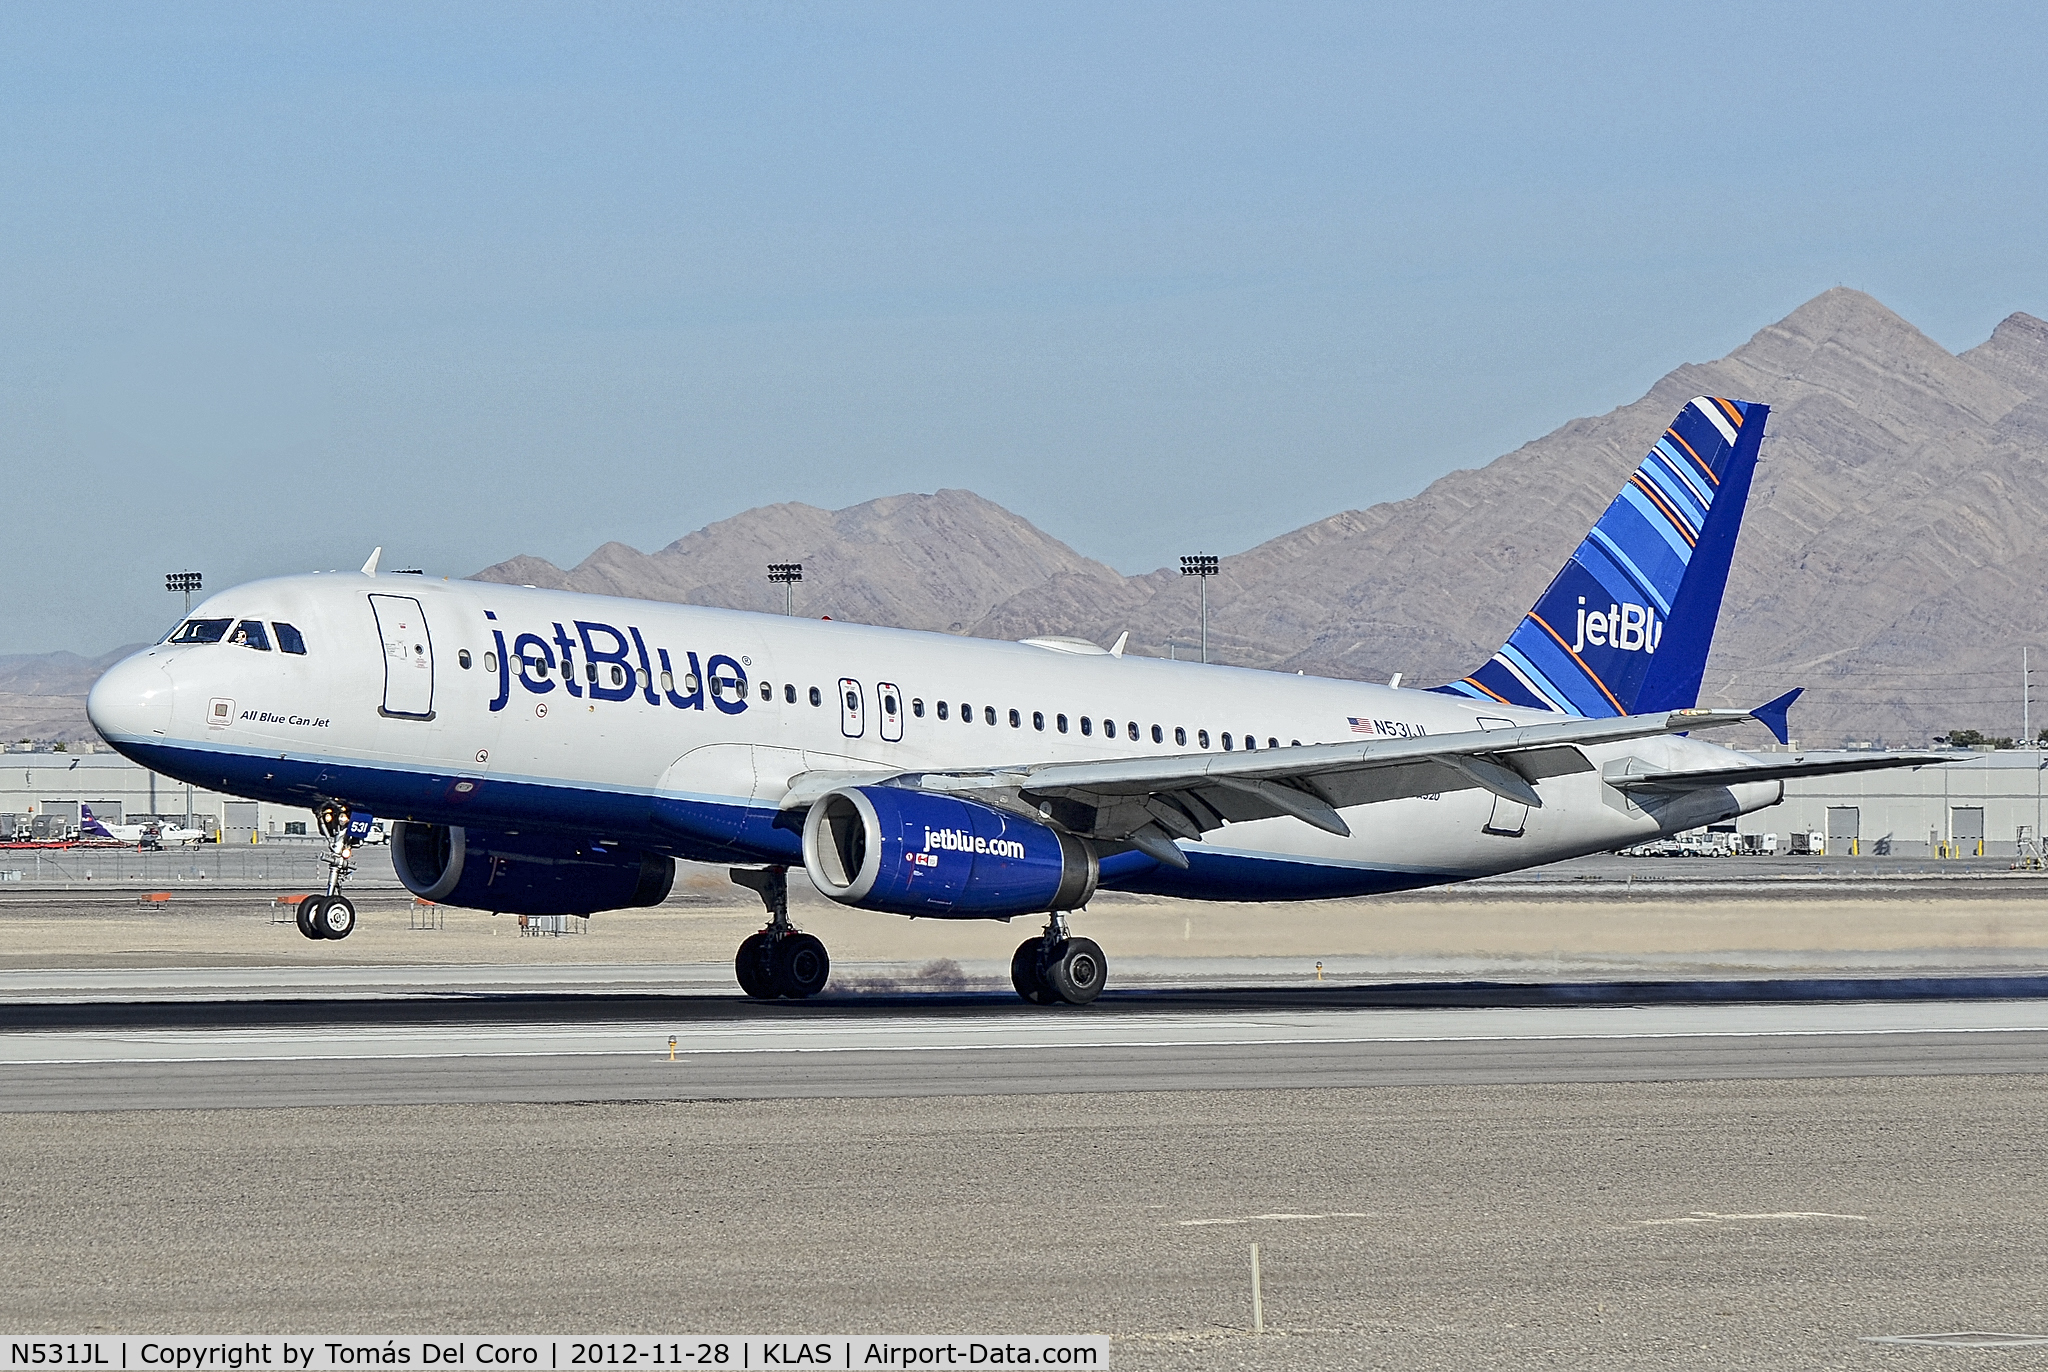 N531JL, 2001 Airbus A320-232 C/N 1650, N531JL JetBlue Airways Airbus A320-232 (cn 1650) 